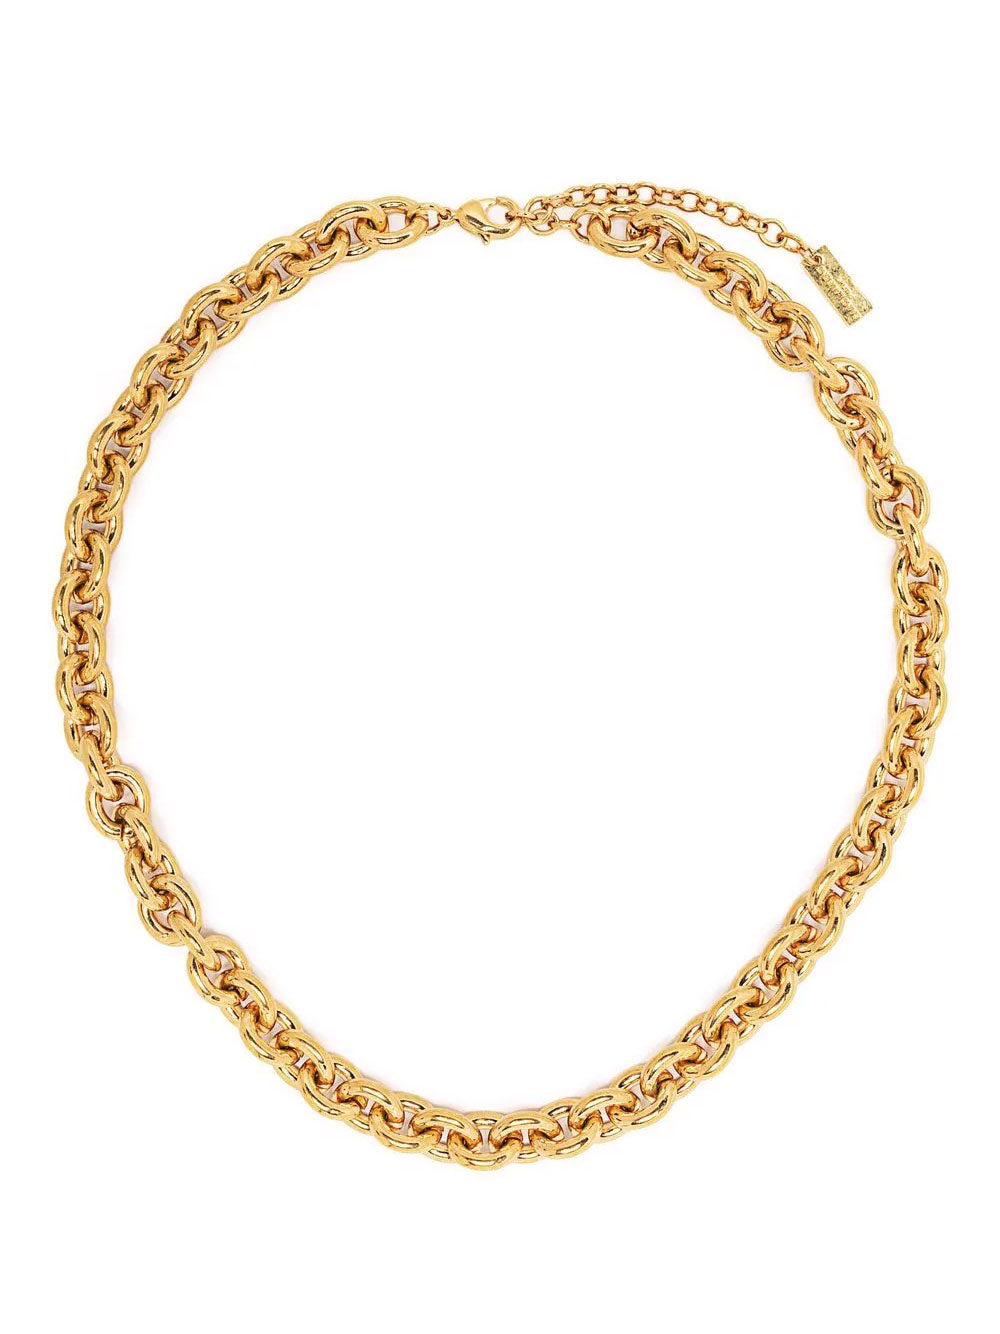 Short gold tone necklace